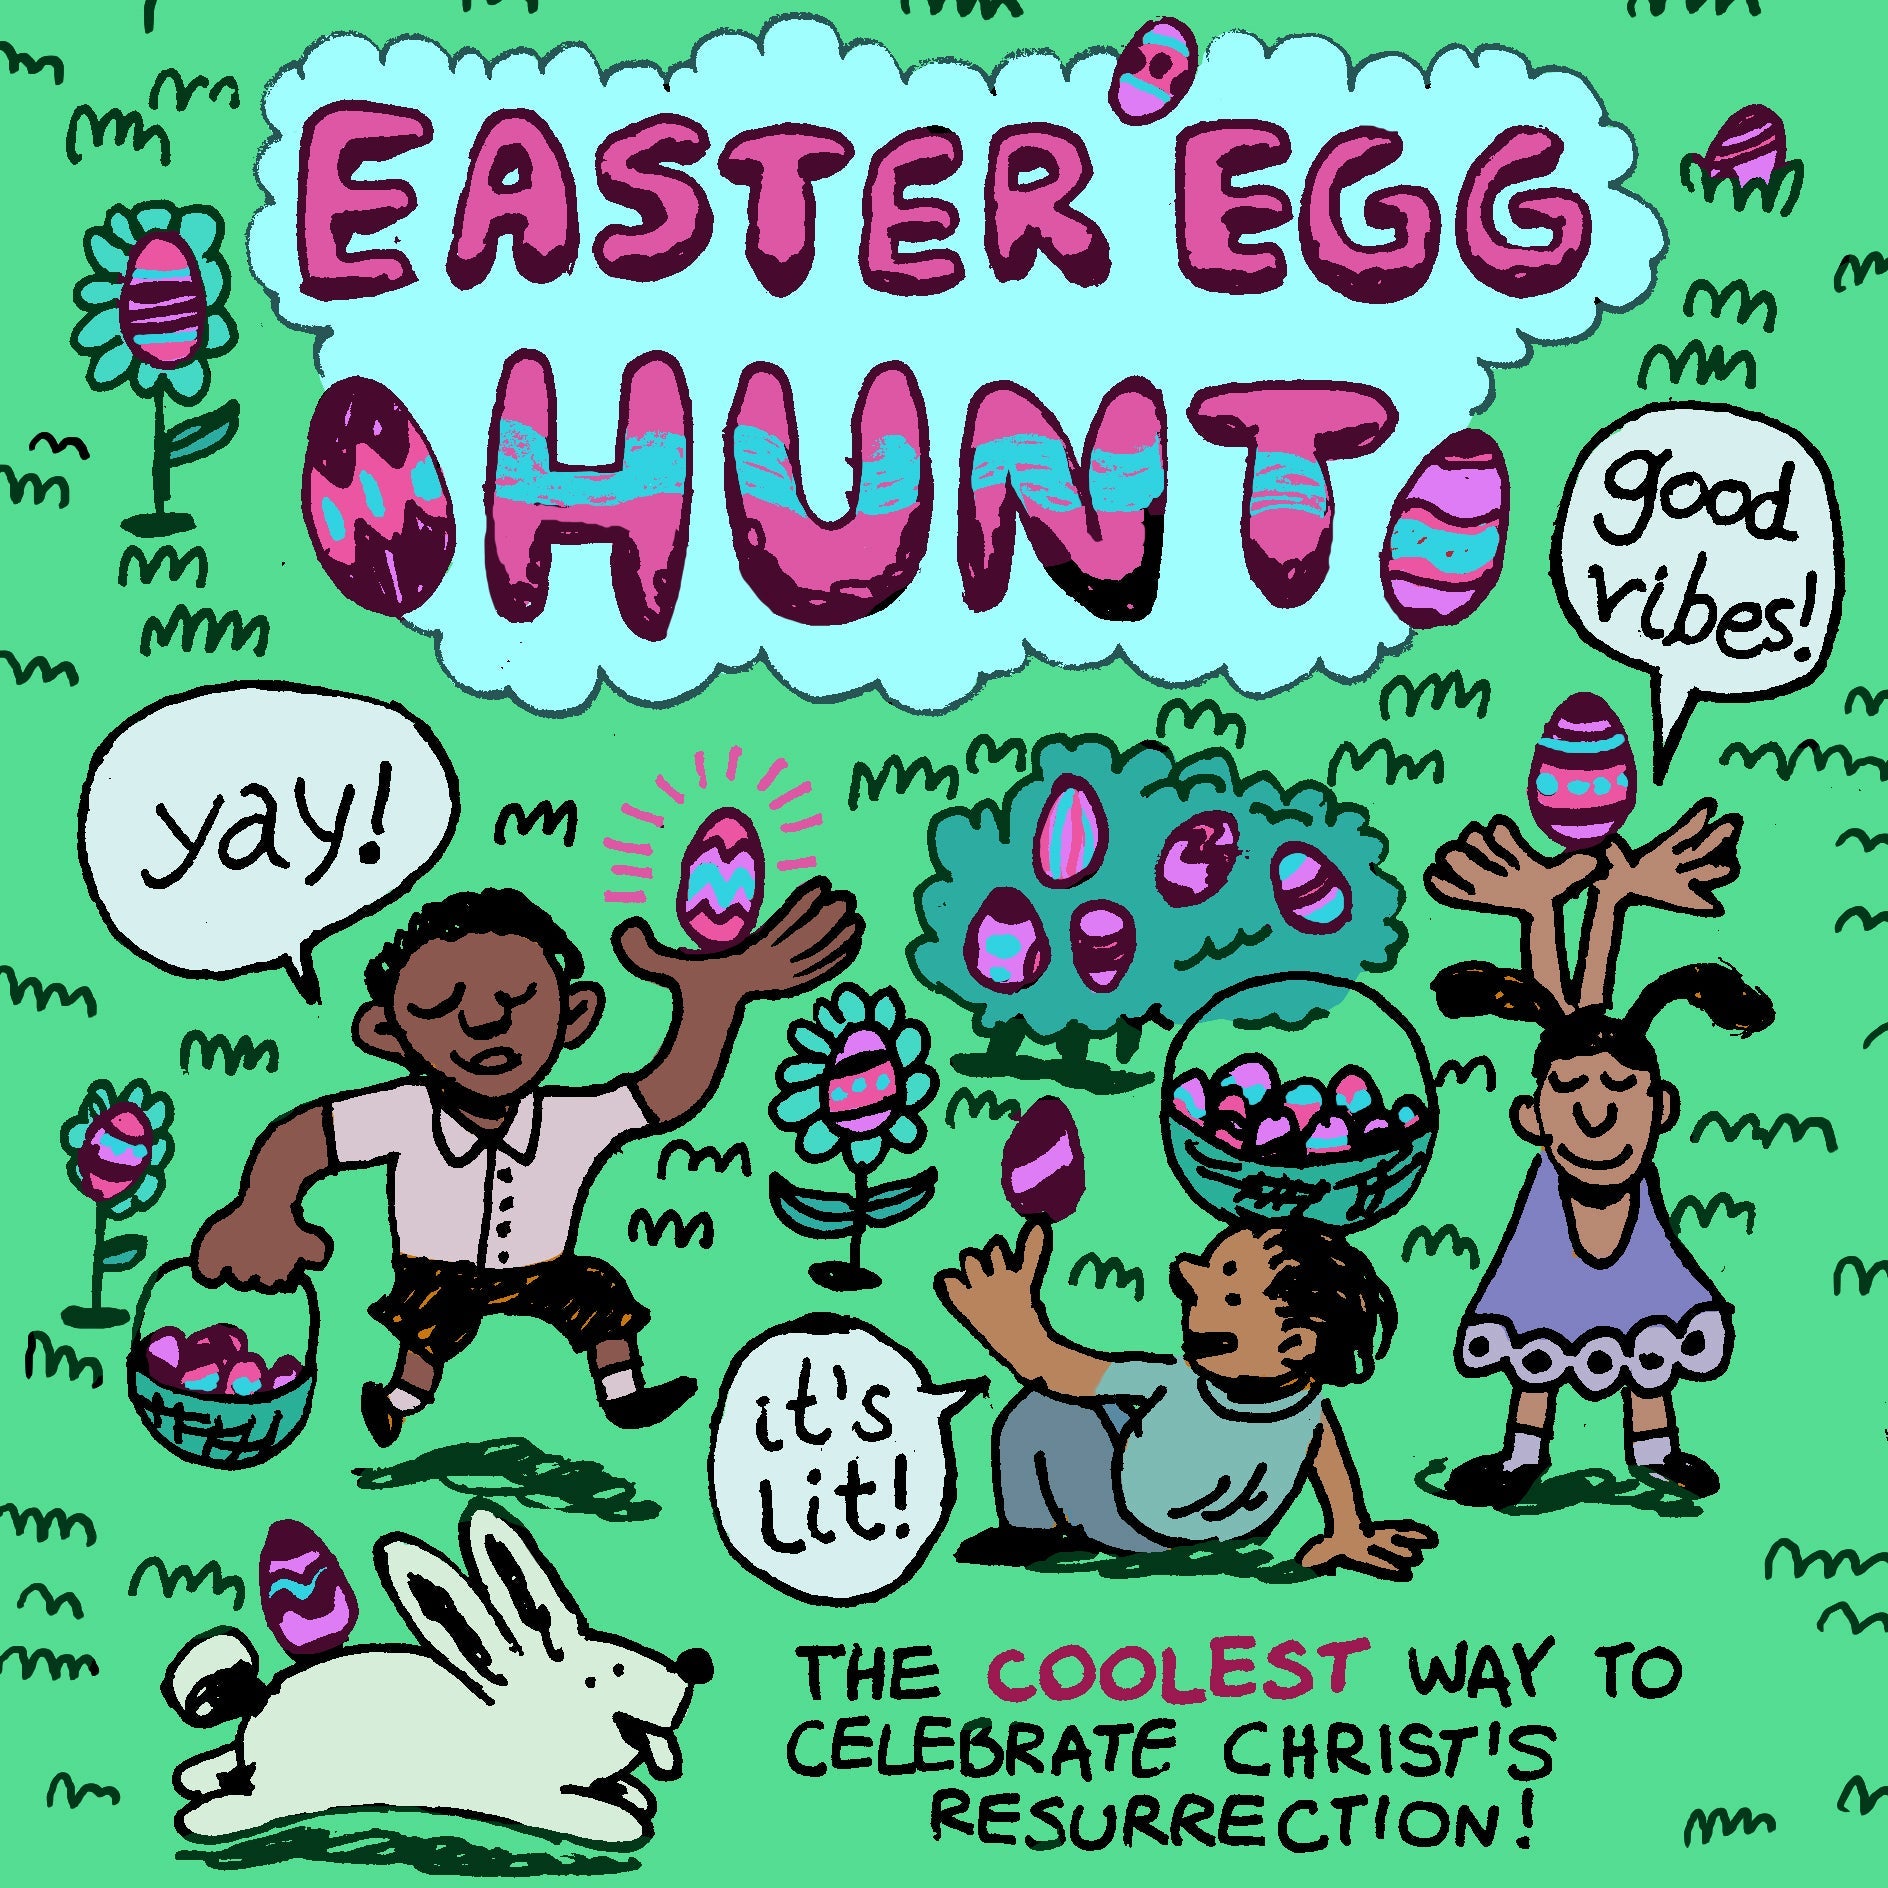 Fake ad for an Easter egg hunt.